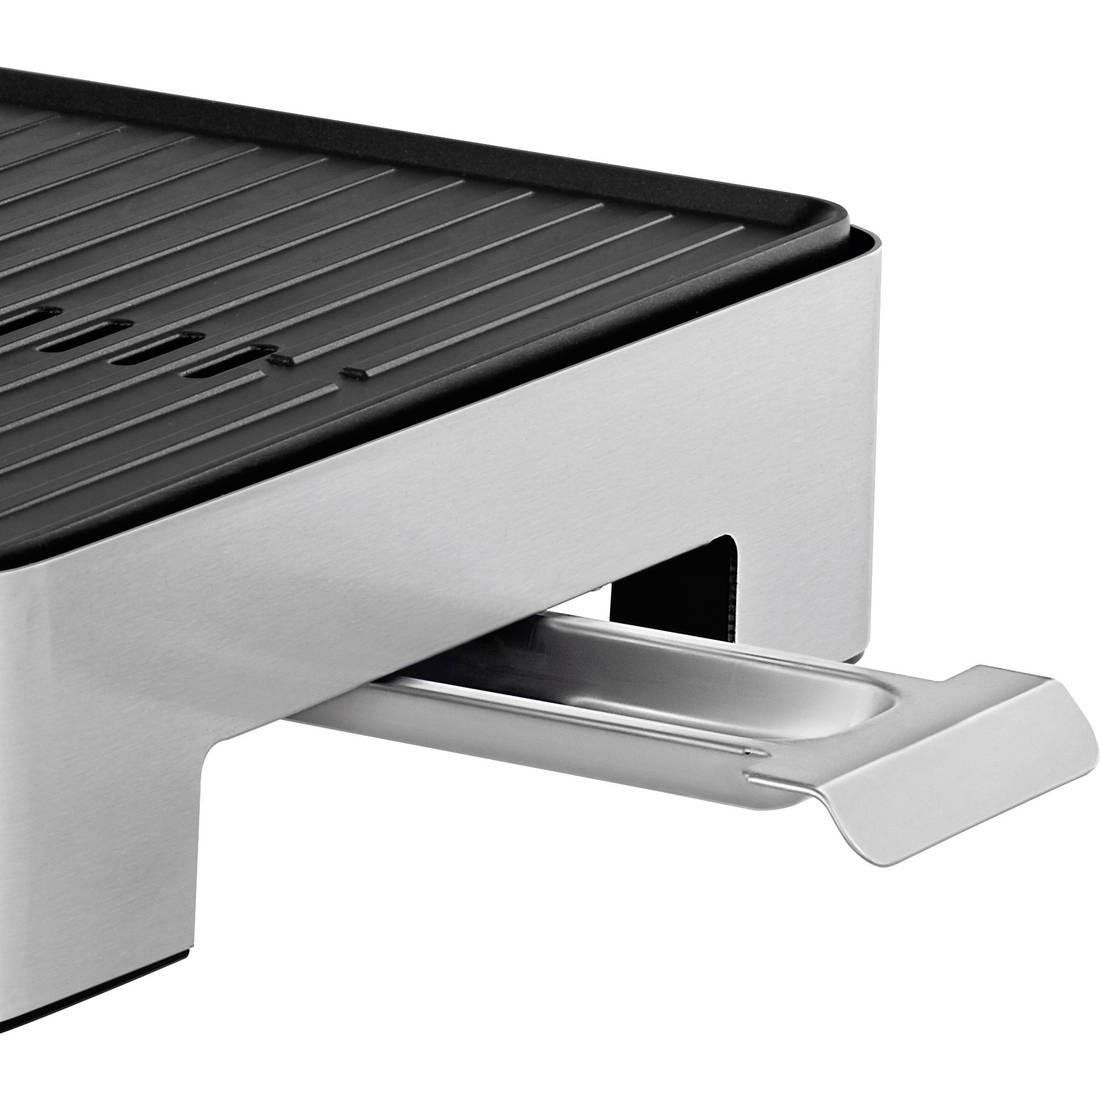 WMF Lono Quadro električan stolni roštilj s ručnim podešavanjem temperature  crna, srebrna - AC group - webshop